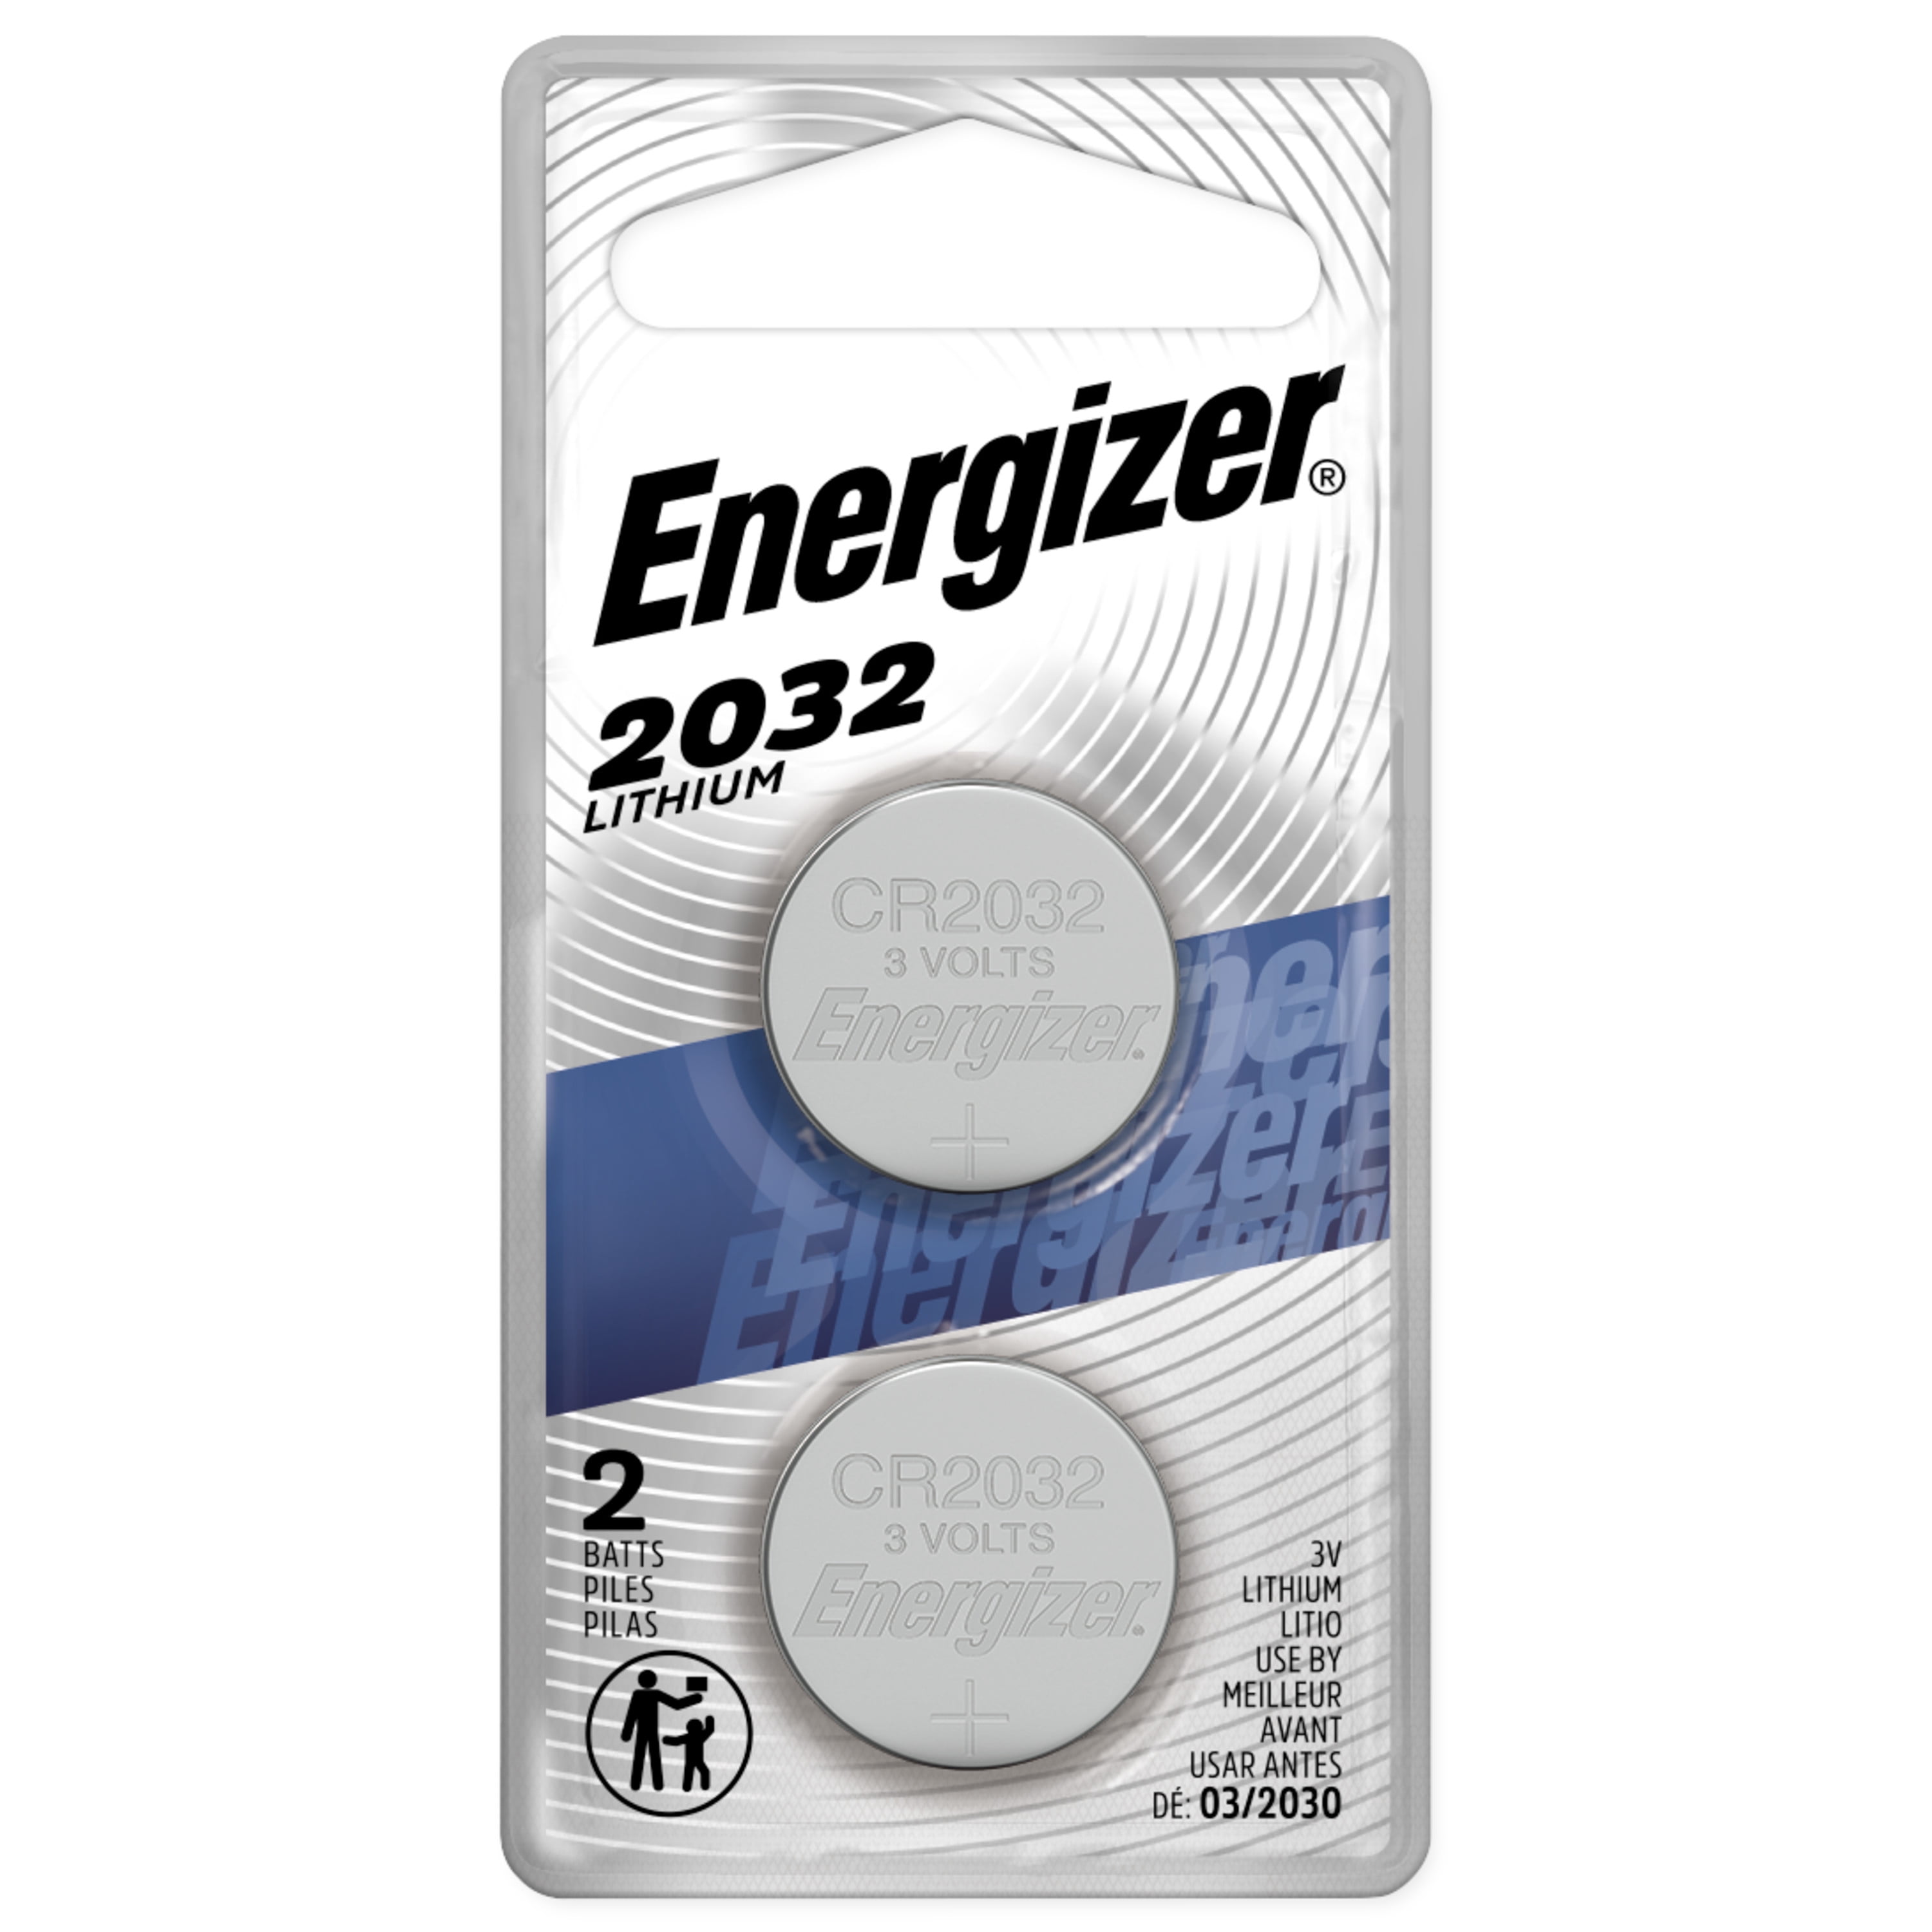 panik sponsoreret galop Energizer 2032 Batteries (2 Pack), 3V Lithium Coin Batteries - Walmart.com